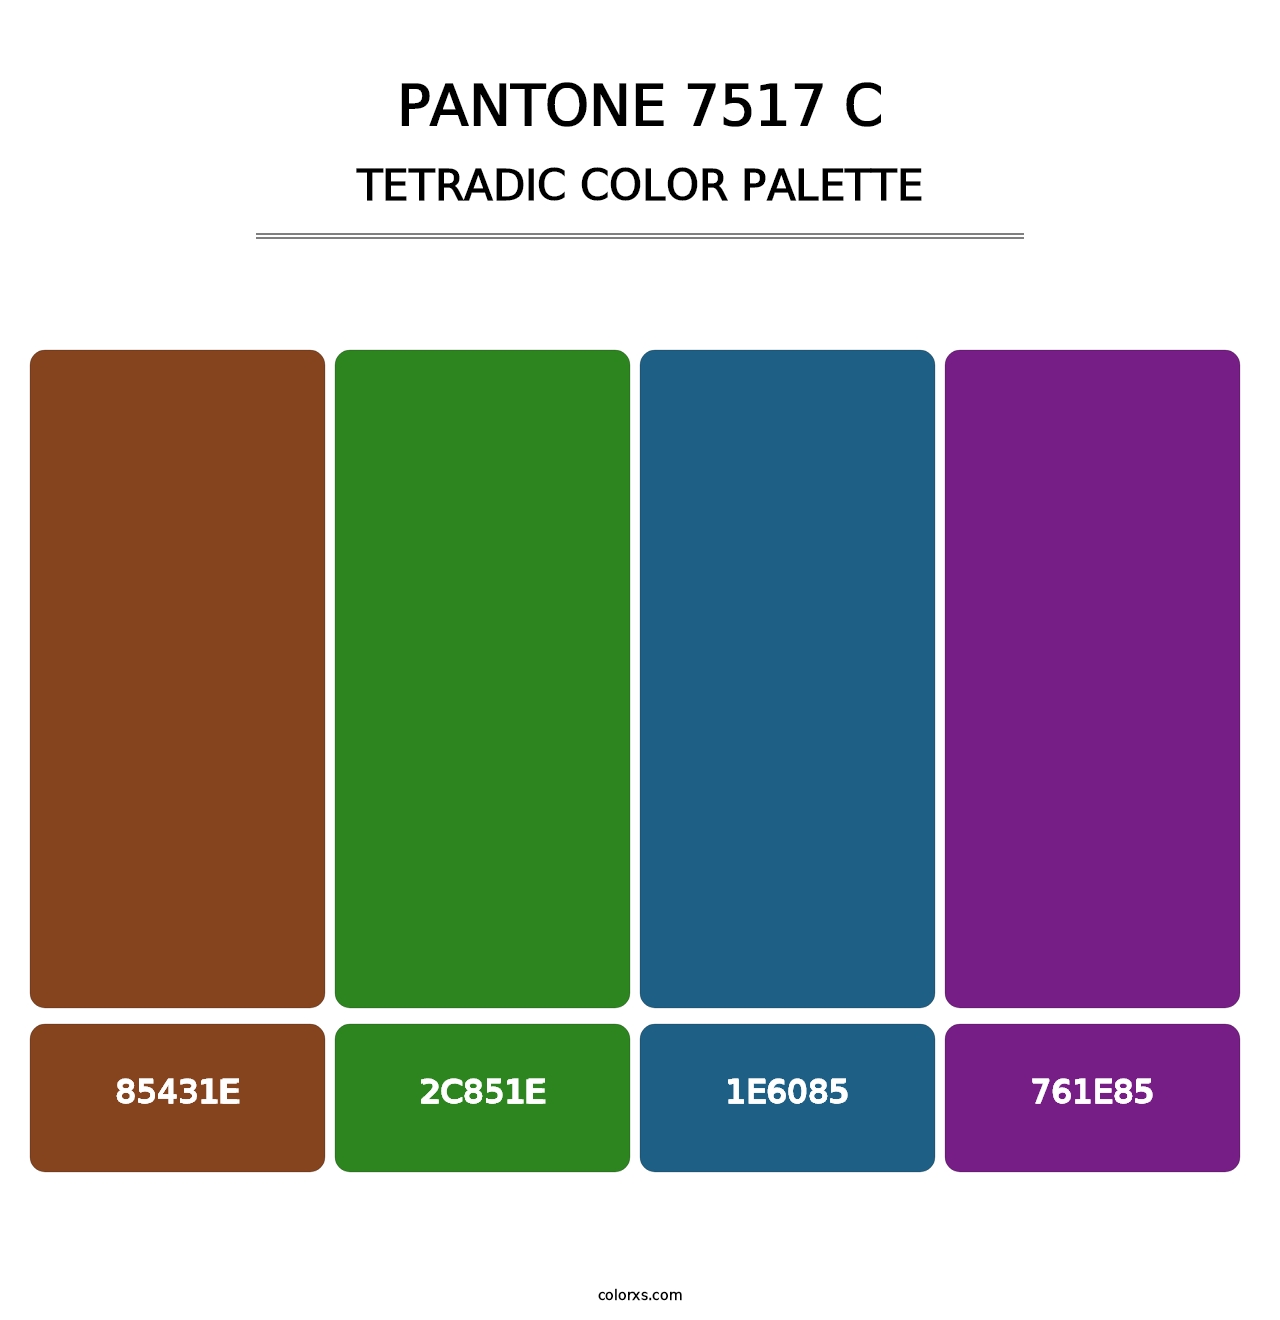 PANTONE 7517 C - Tetradic Color Palette